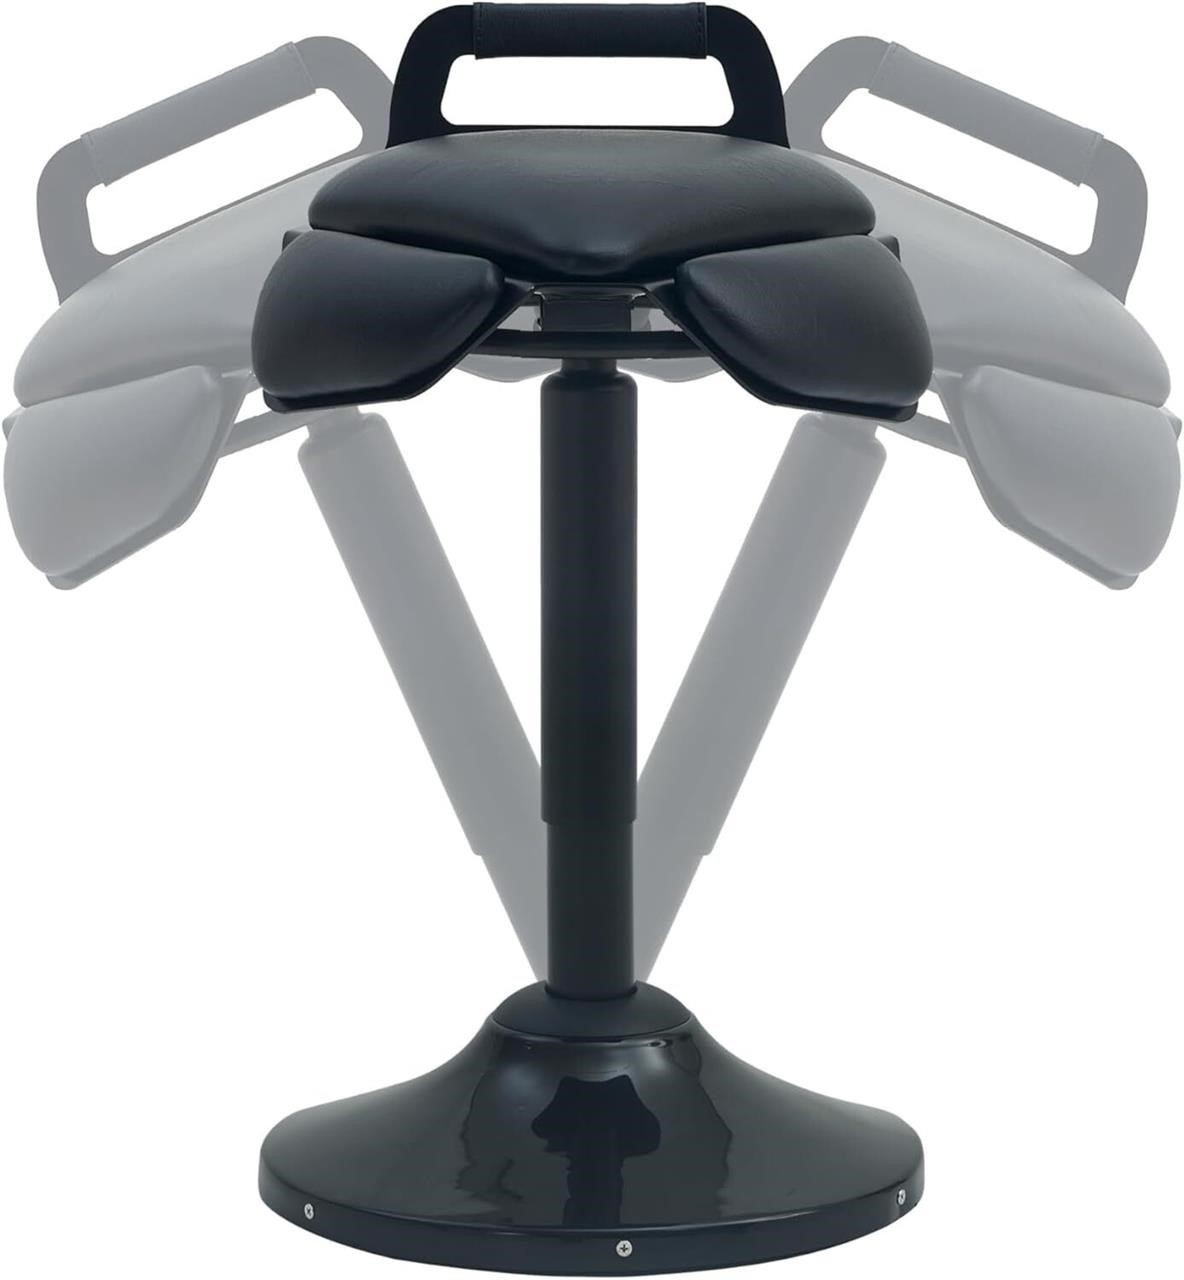 Wobble Stool  Ergonomic  Adjustable Desk Chair